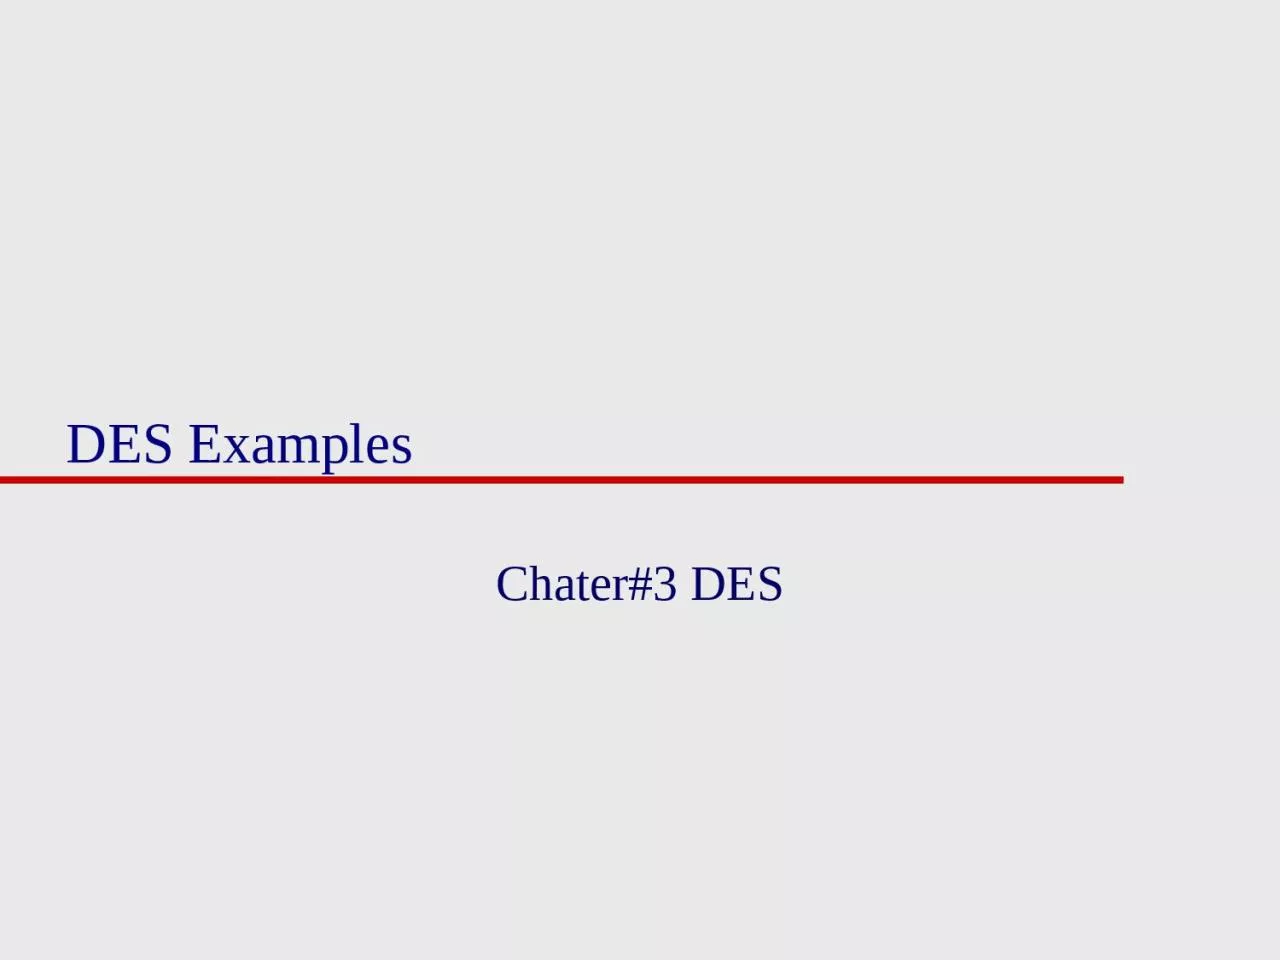 DES Examples Chater#3 DES